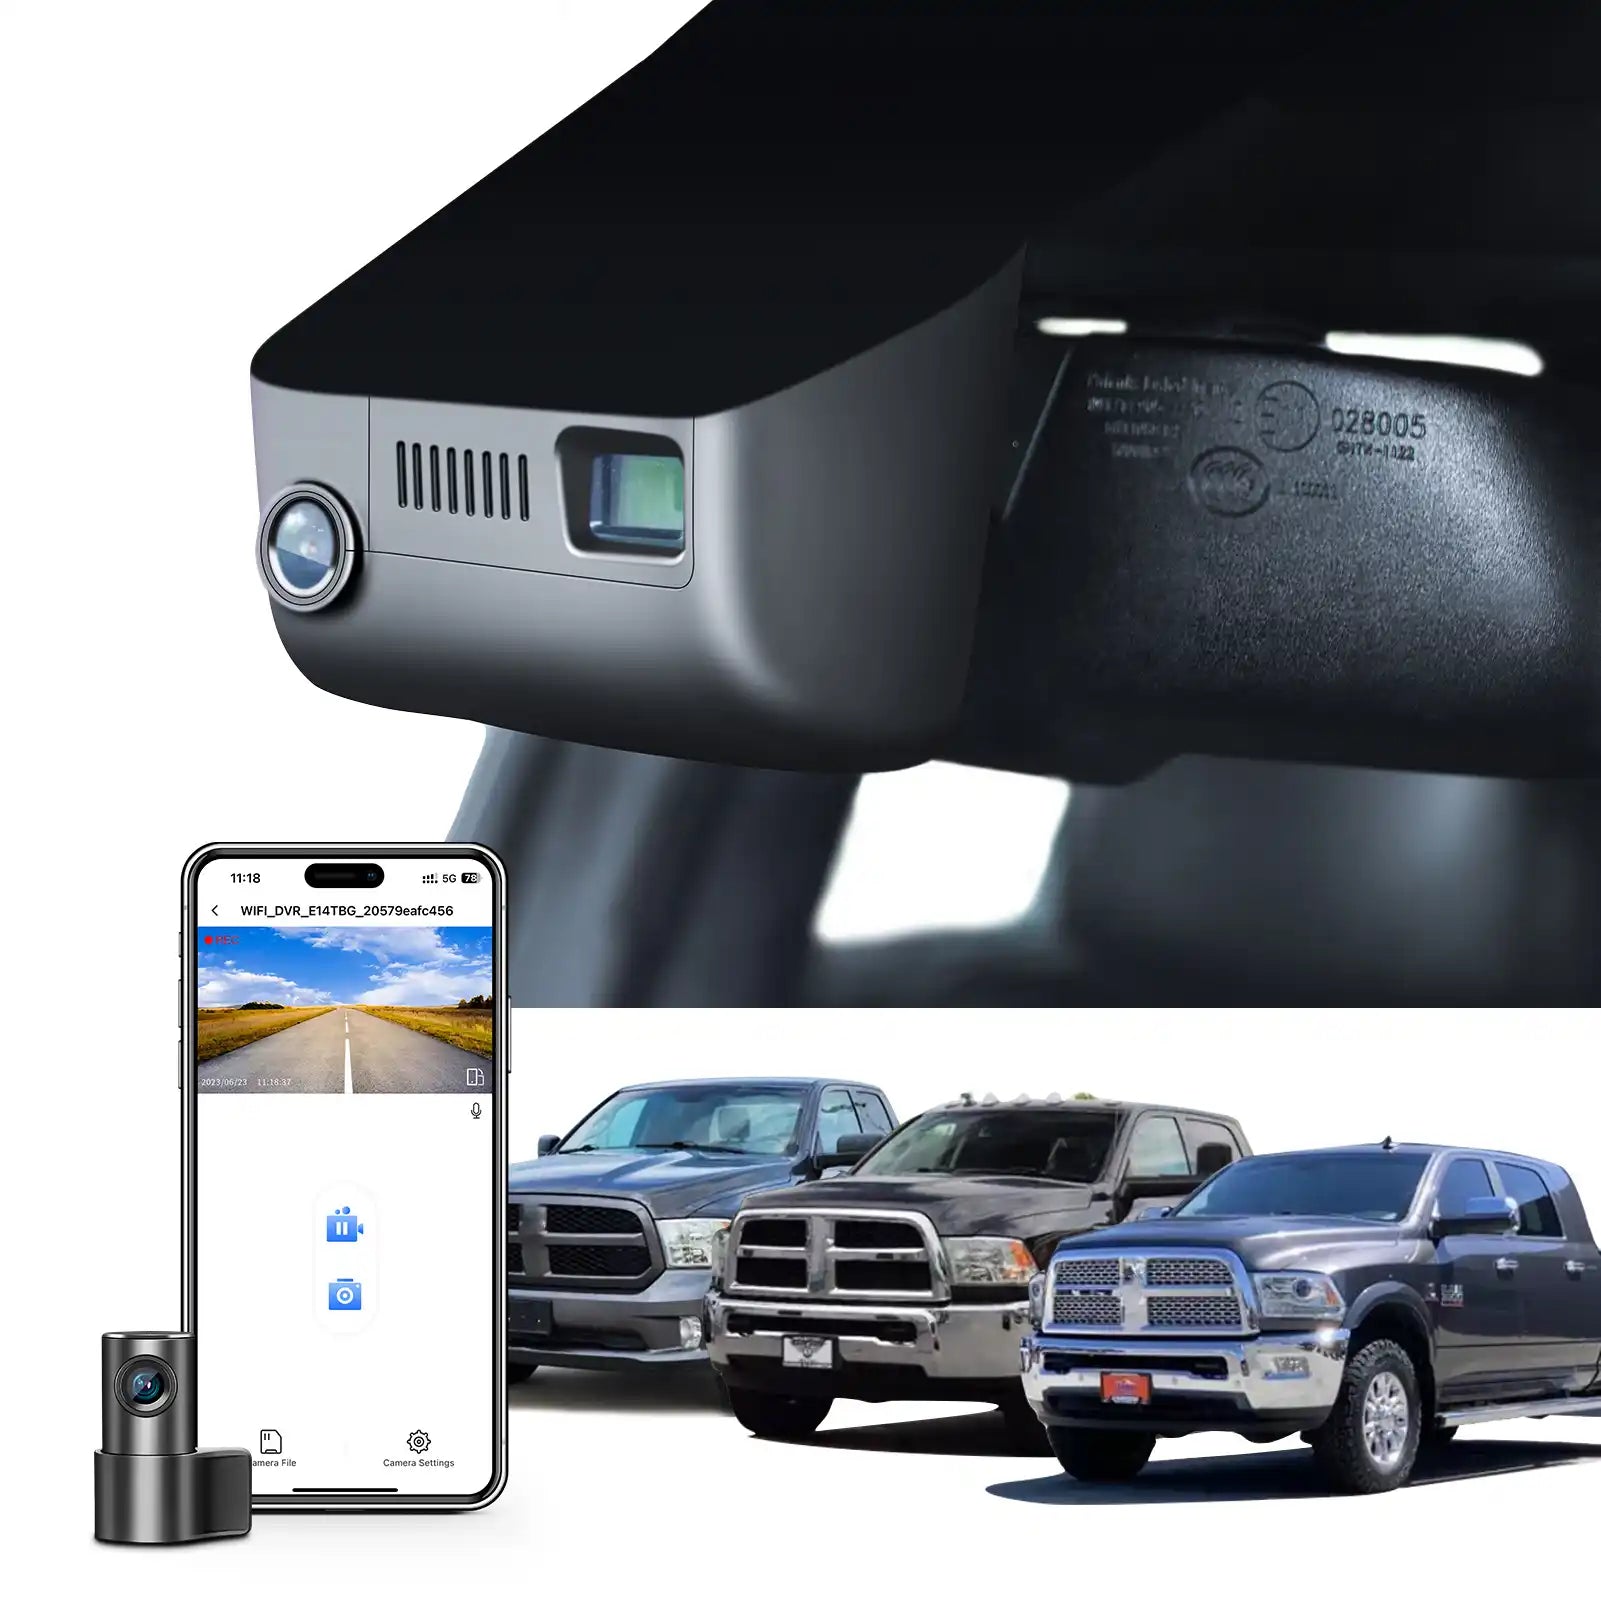 Mangoal Front 4K & Rear 1080P Dash Cam Custom for Dodge RAM 1500/2500/3500 2013 2014 2015 2016 2017 2018 Accessories, 1500 Classic 2019-2022(Model C), OEM Look, UHD 2160P Video, WiFi & App, 128GB Card